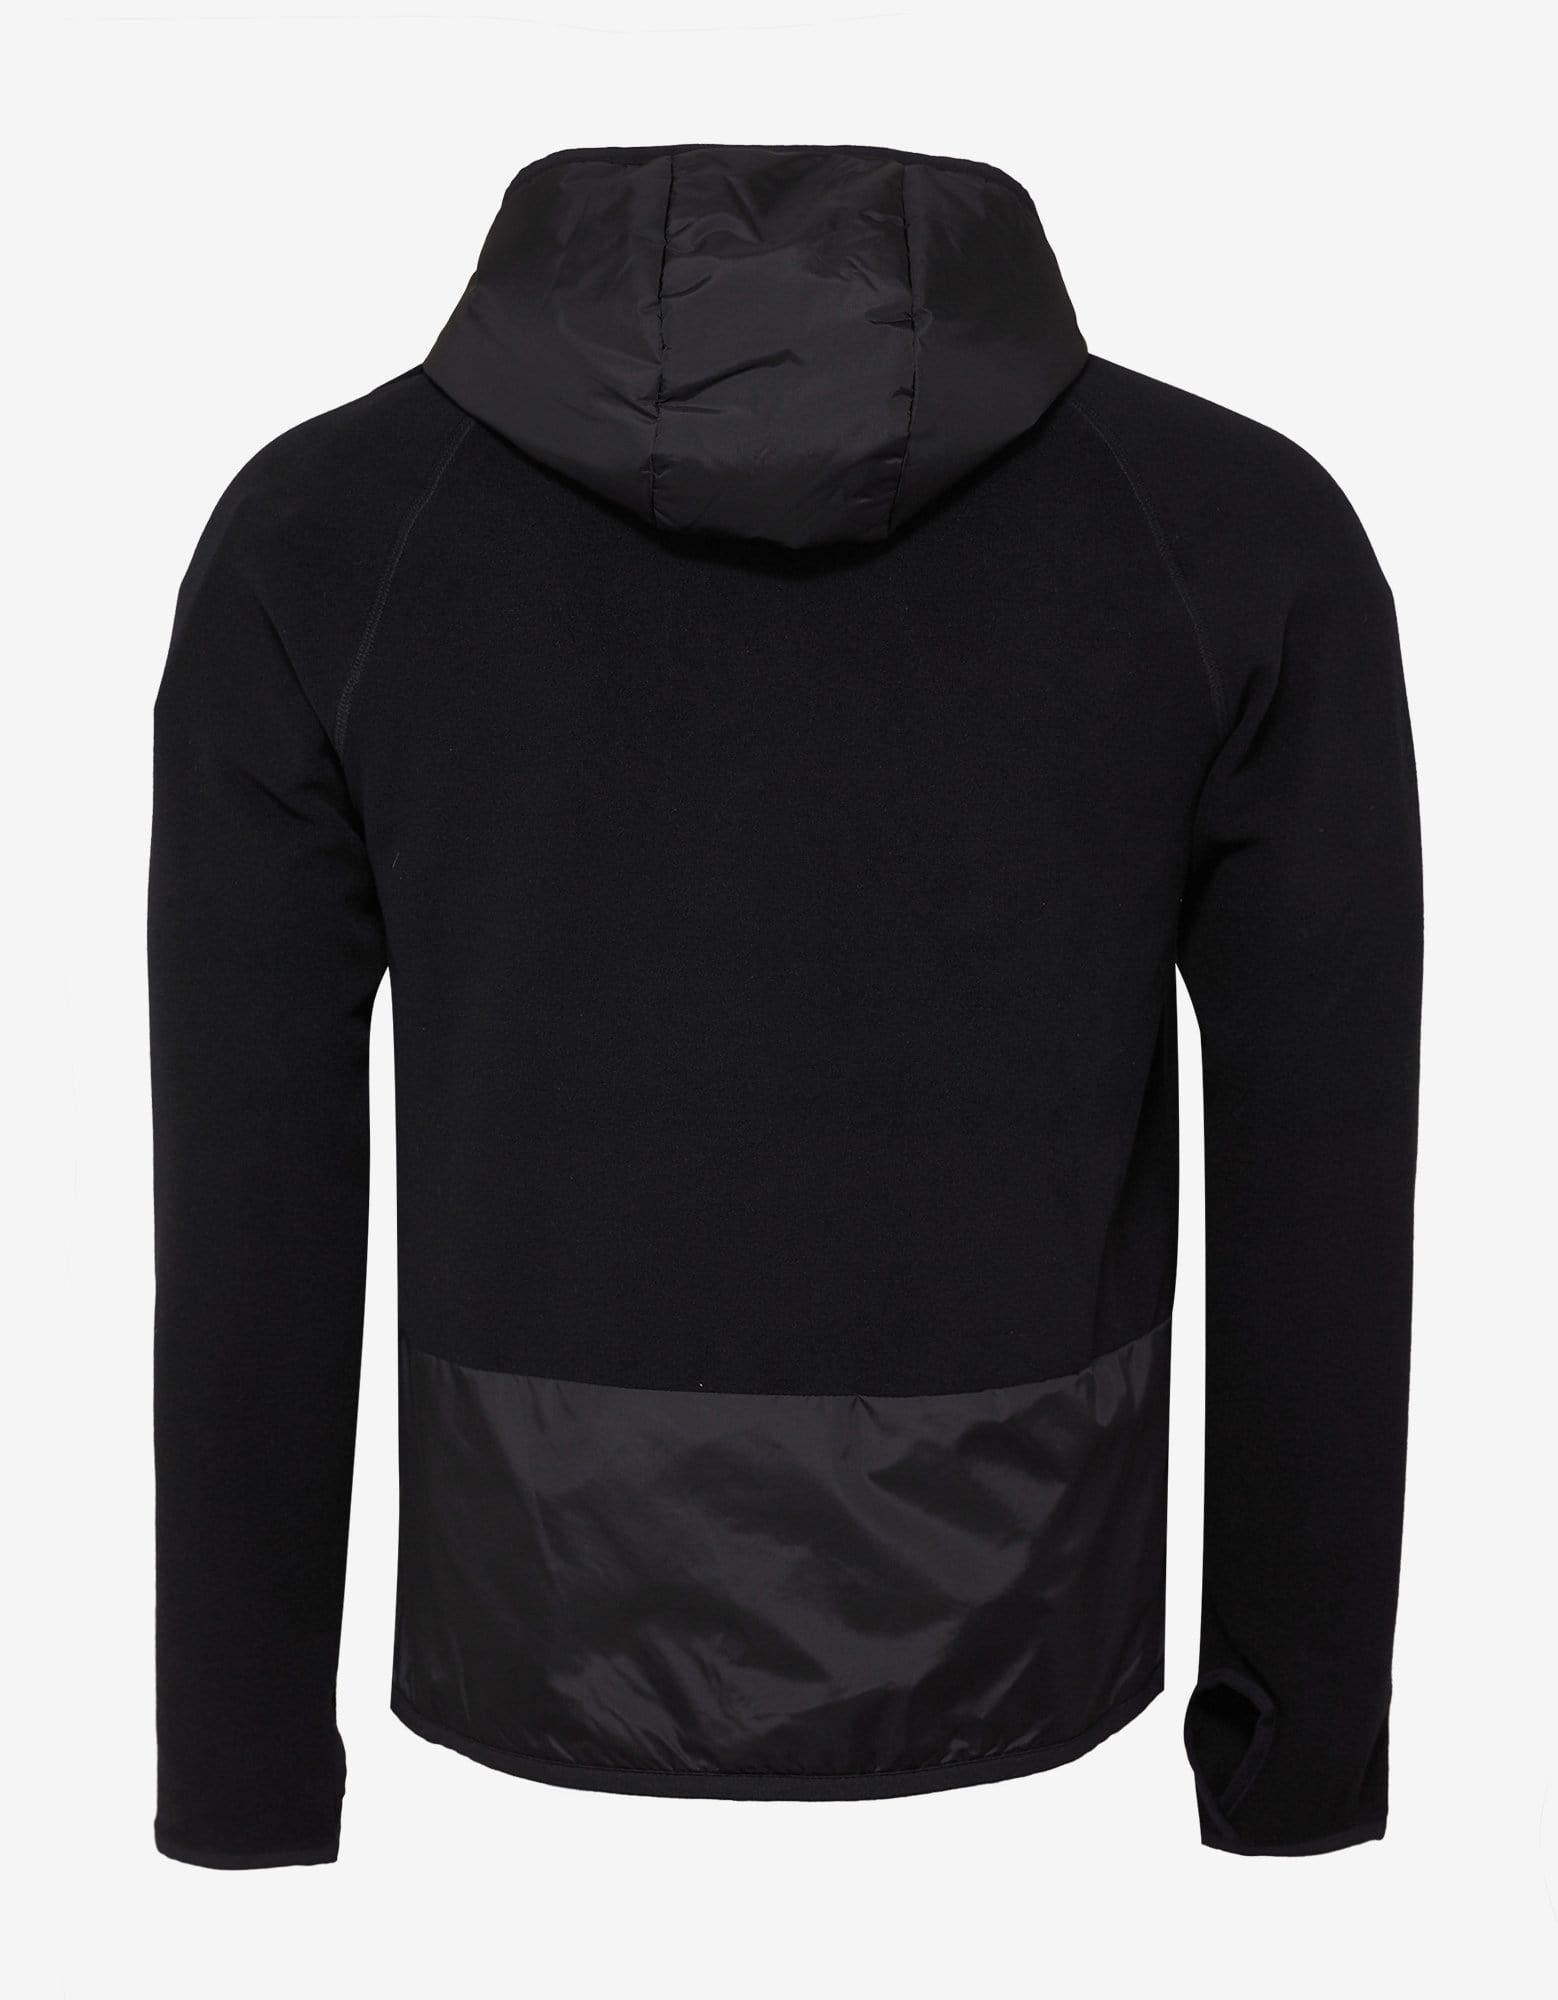 Black & Blue Hooded Fleece Sweatshirt - 5